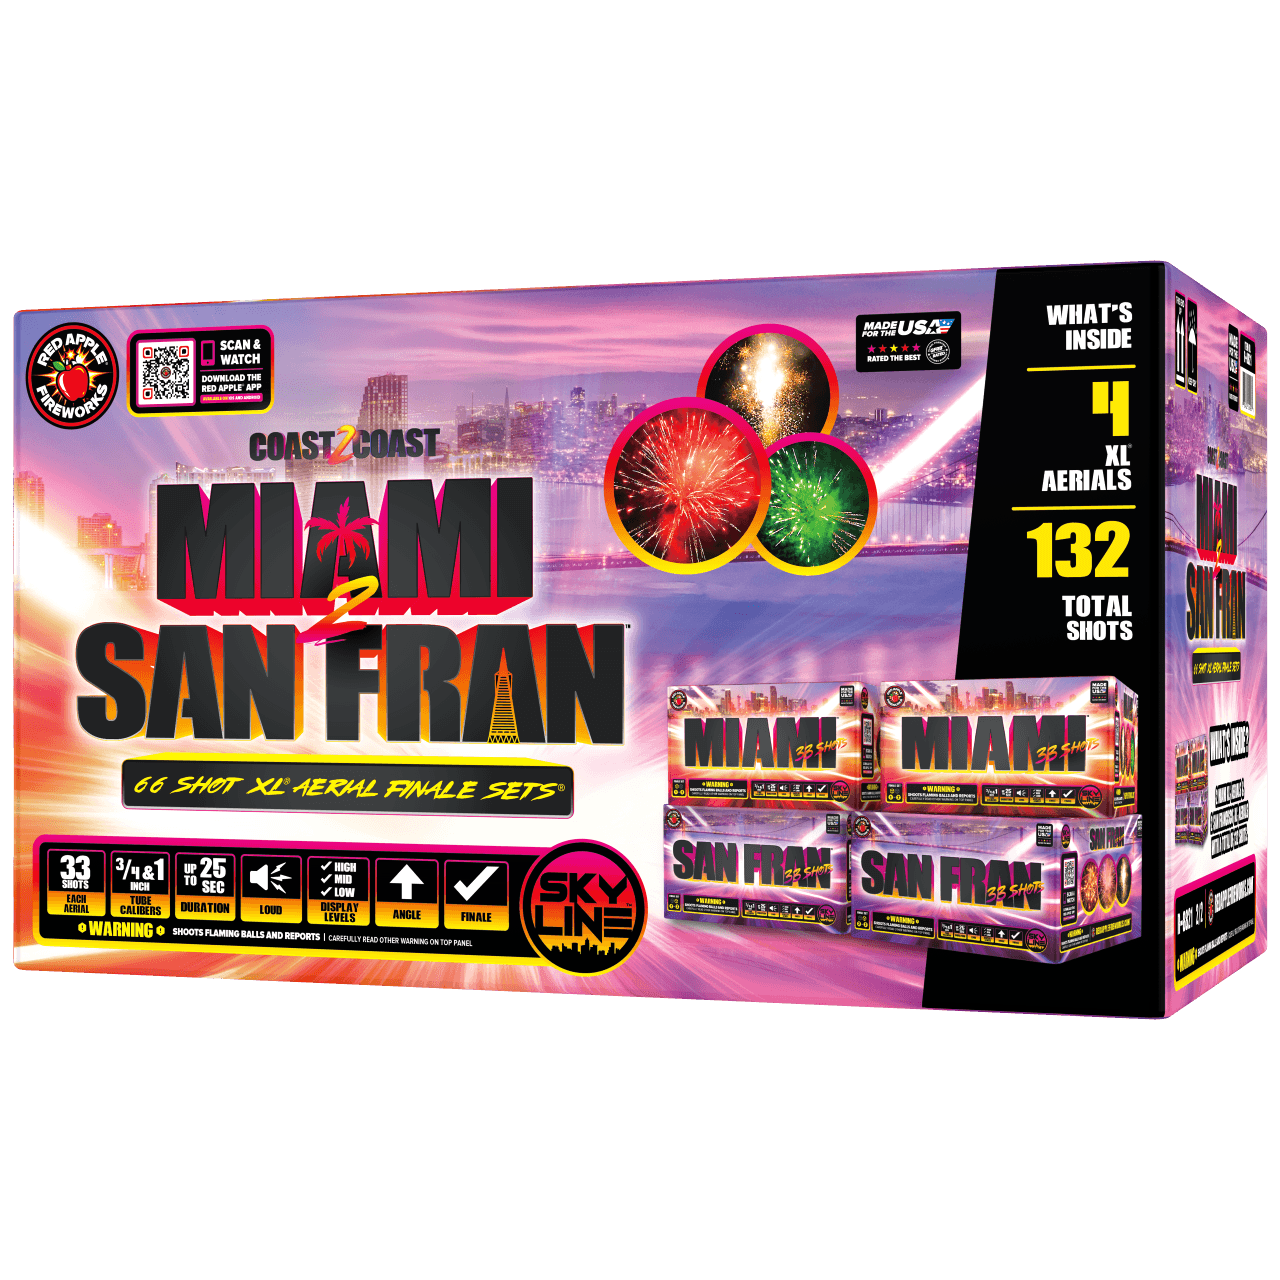 Miami 2 San Fran™ 66 Shots XL® Aerial Finale Set®